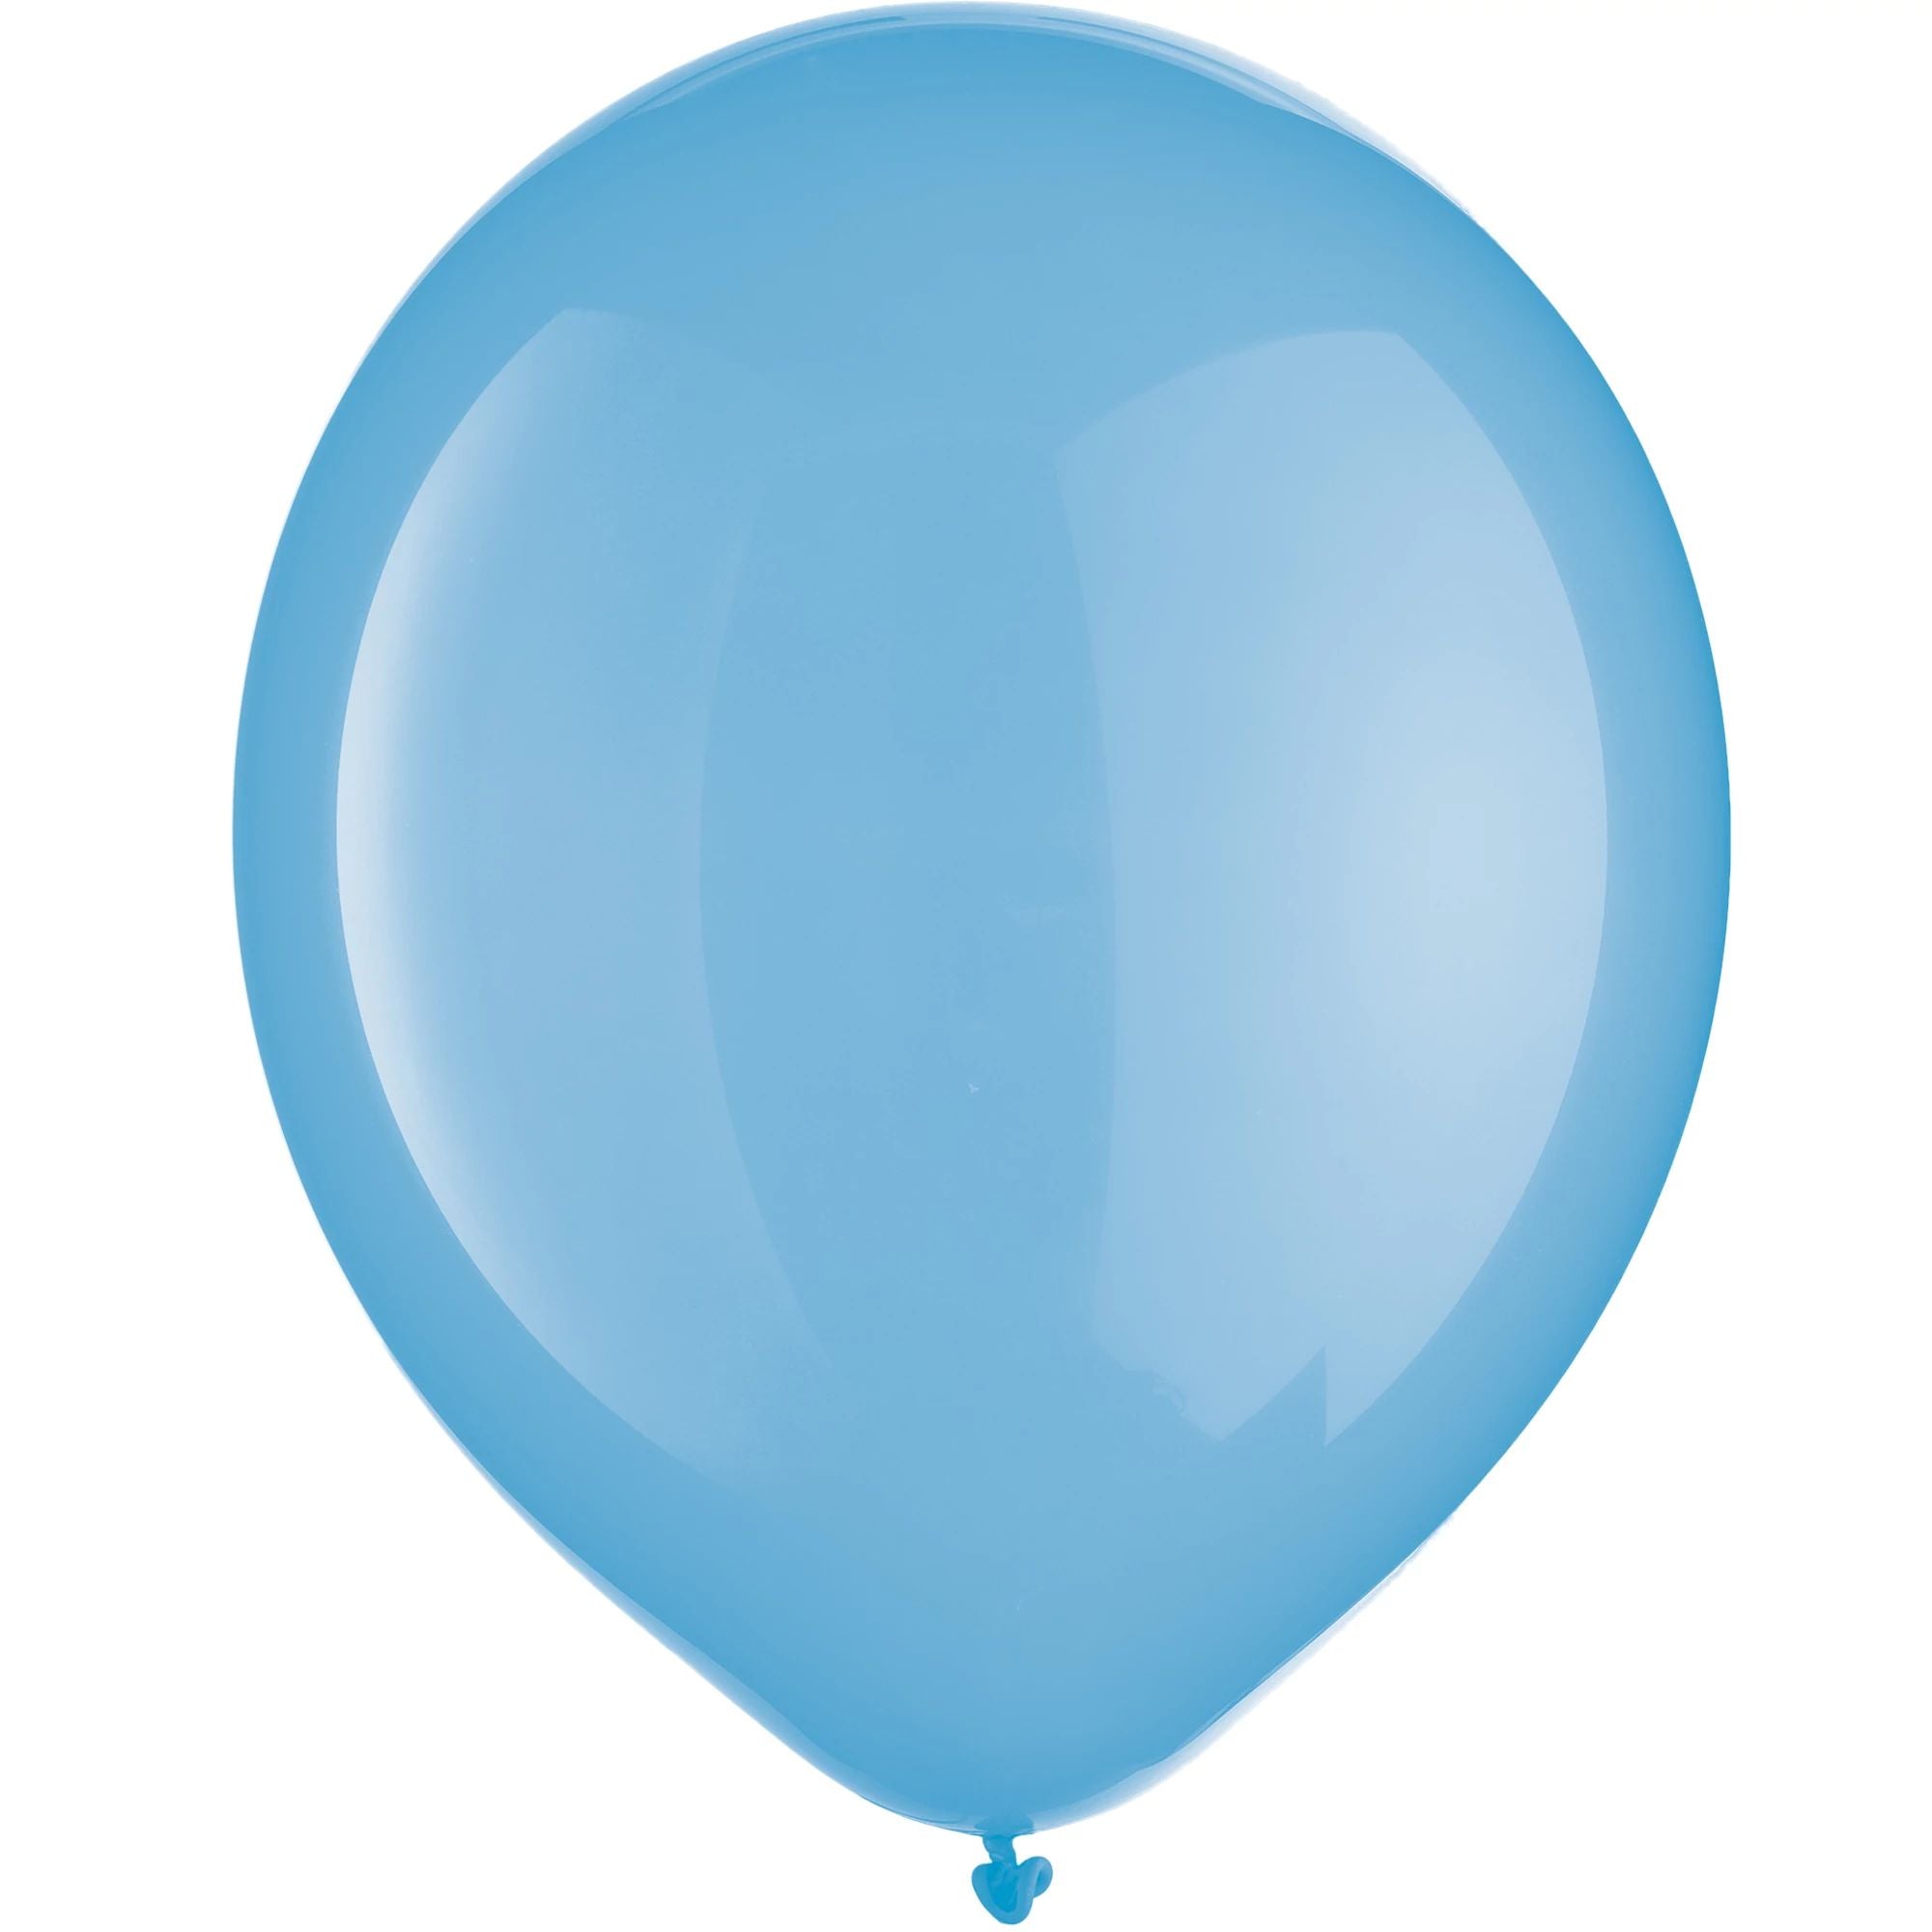 Amscan BALLOONS 12" Latex Balloons, 15ct - Powder Blue